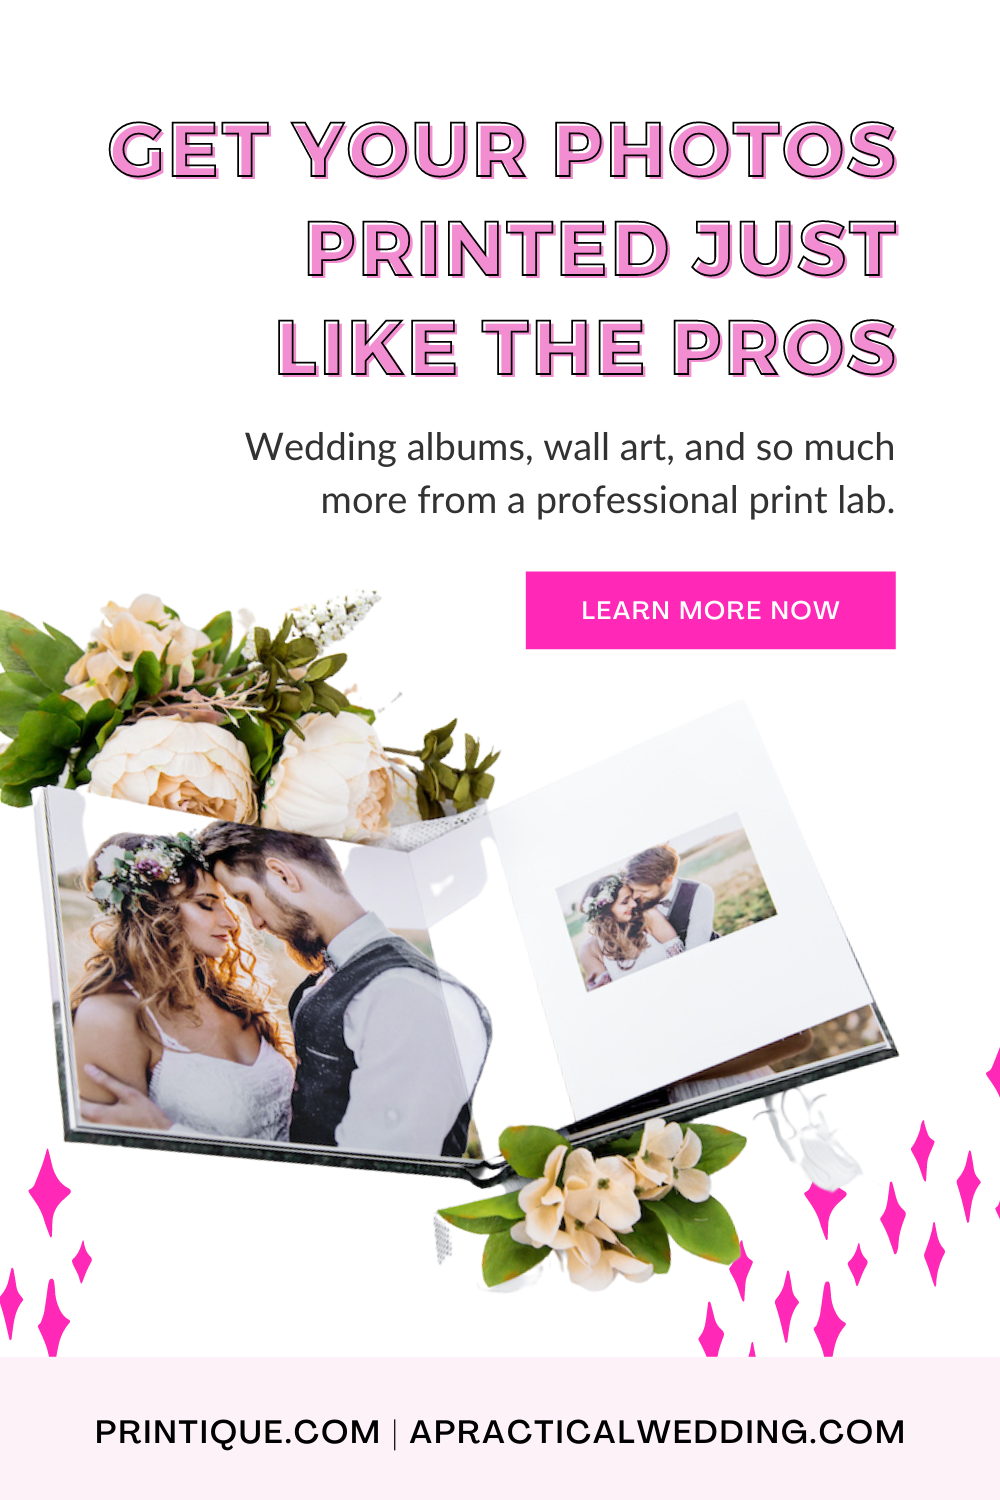 Benefits of a Printed Wedding Album vs. a Digital Wedding Album